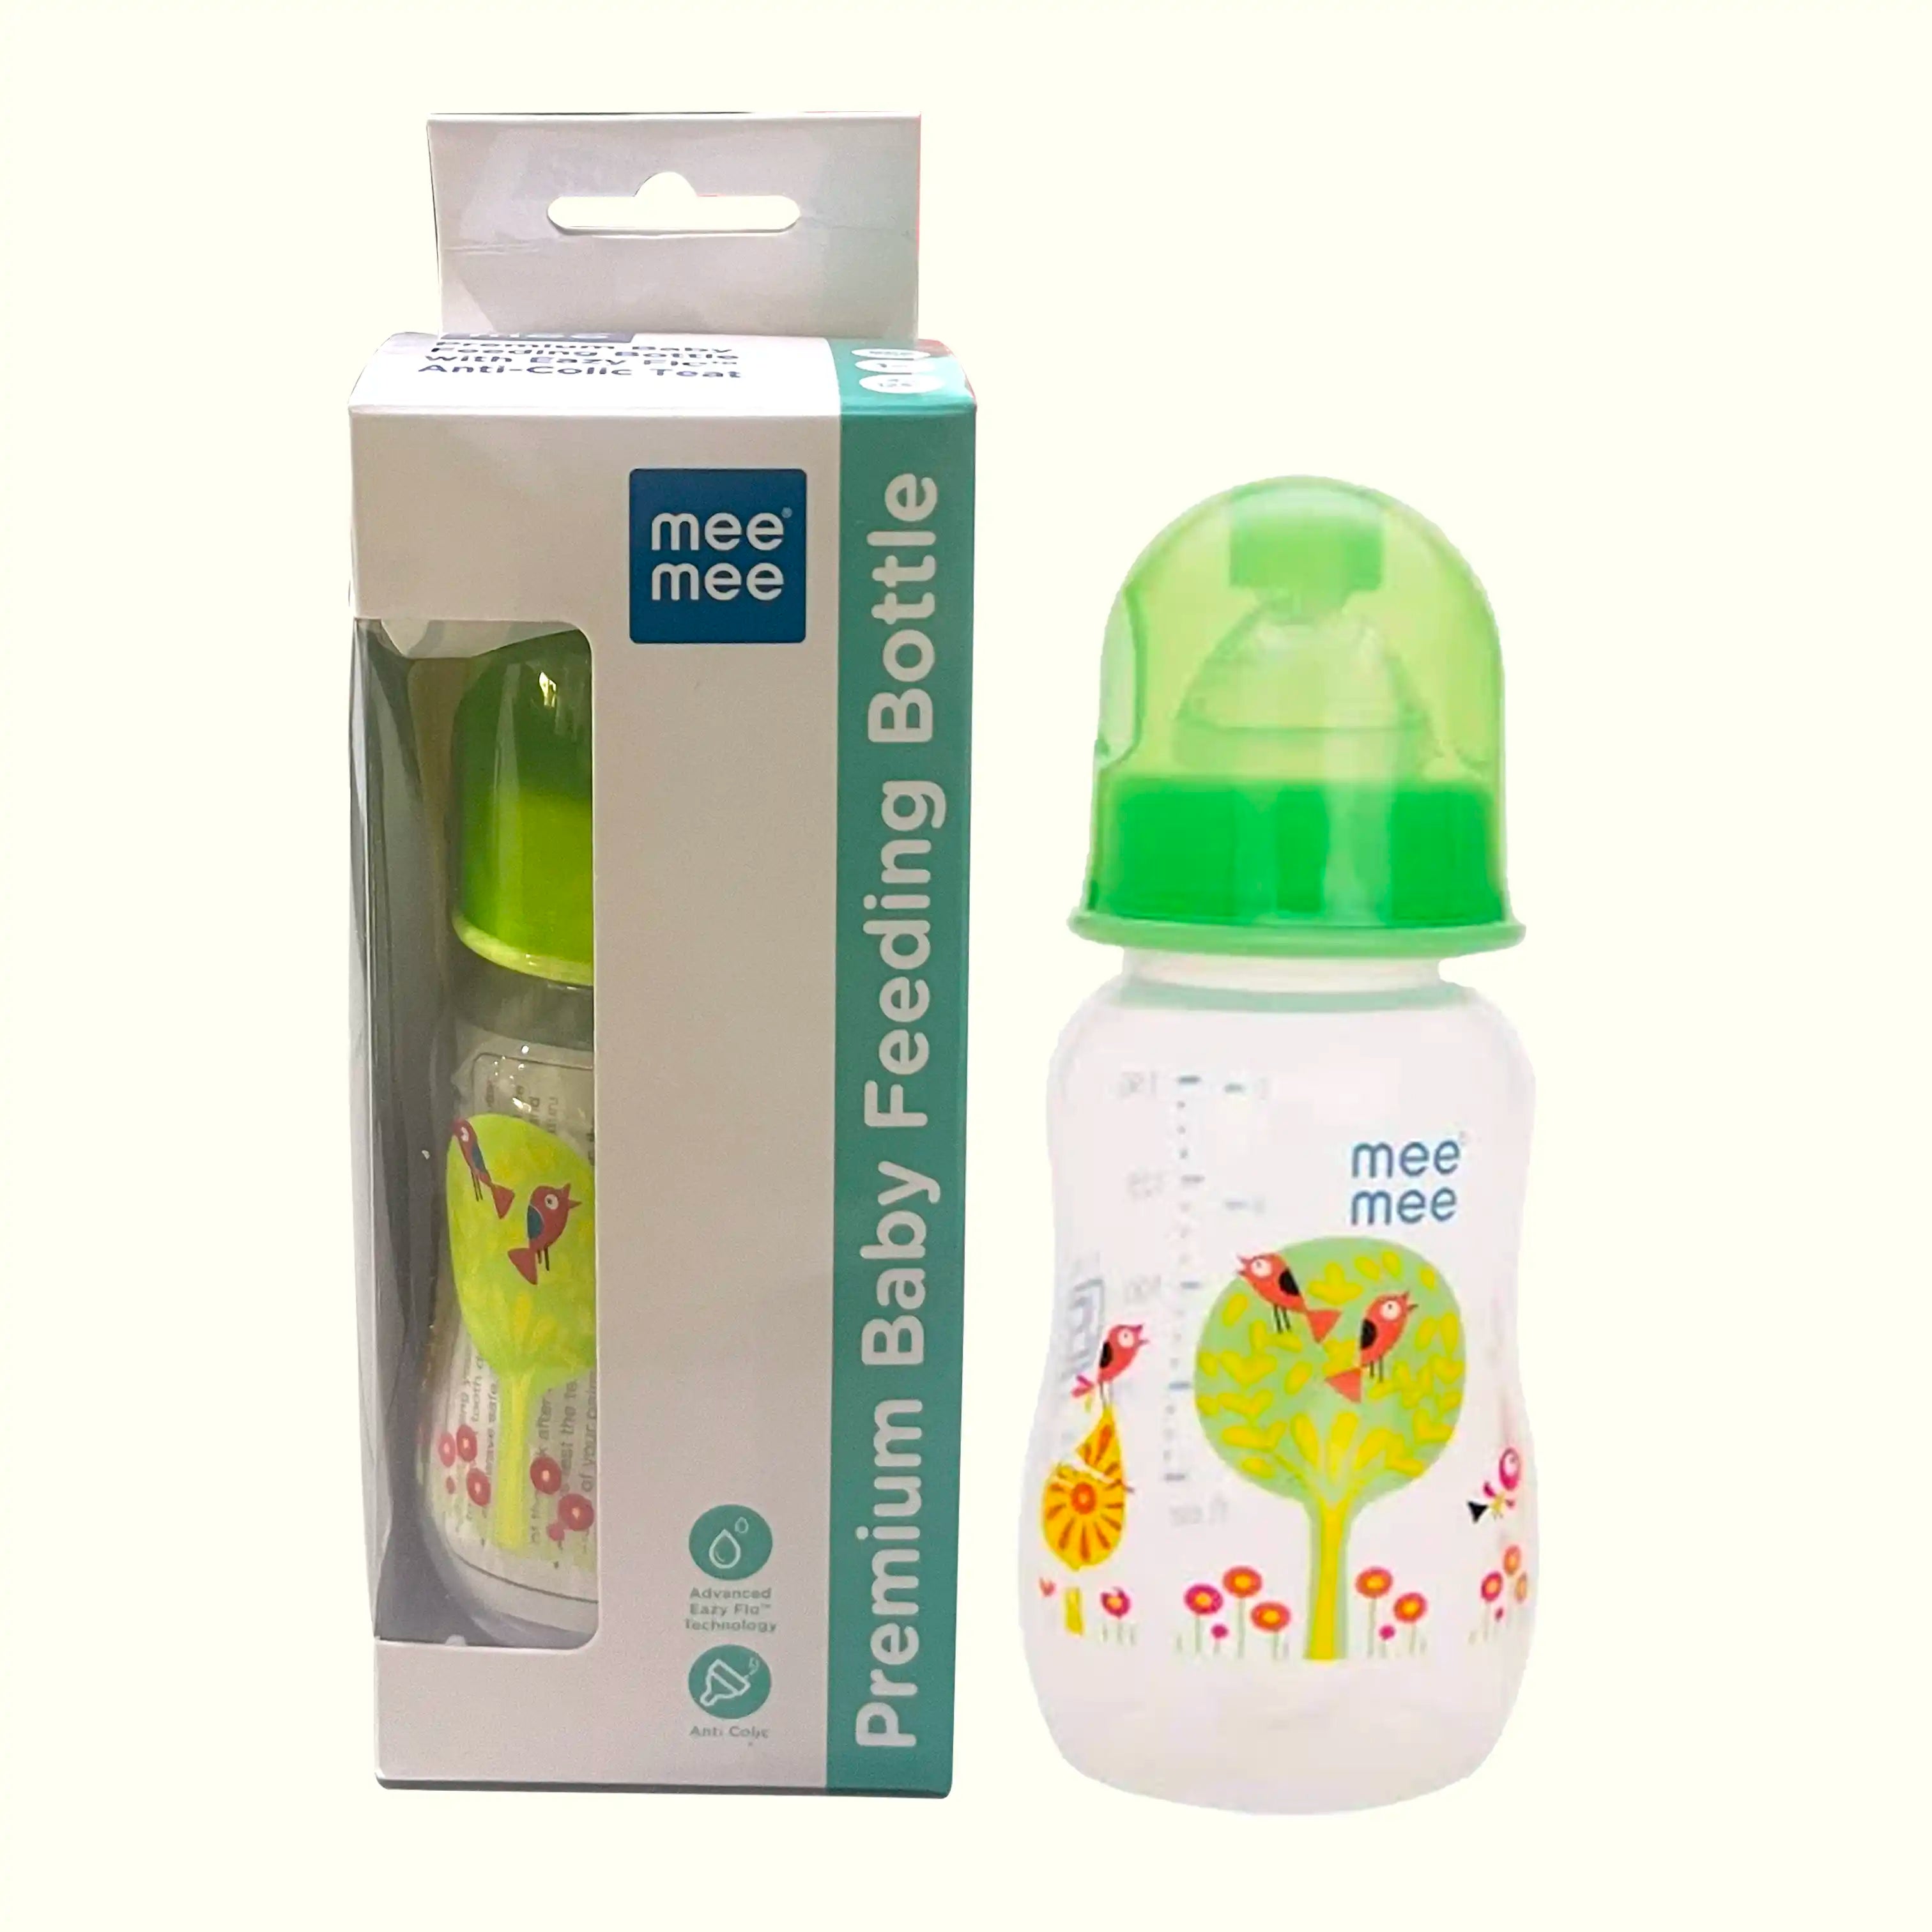 Buy Mee Mee Baby Milk Feeding Bottle with Anti-Colic Teat - 125ml Online India at uyyaala.com